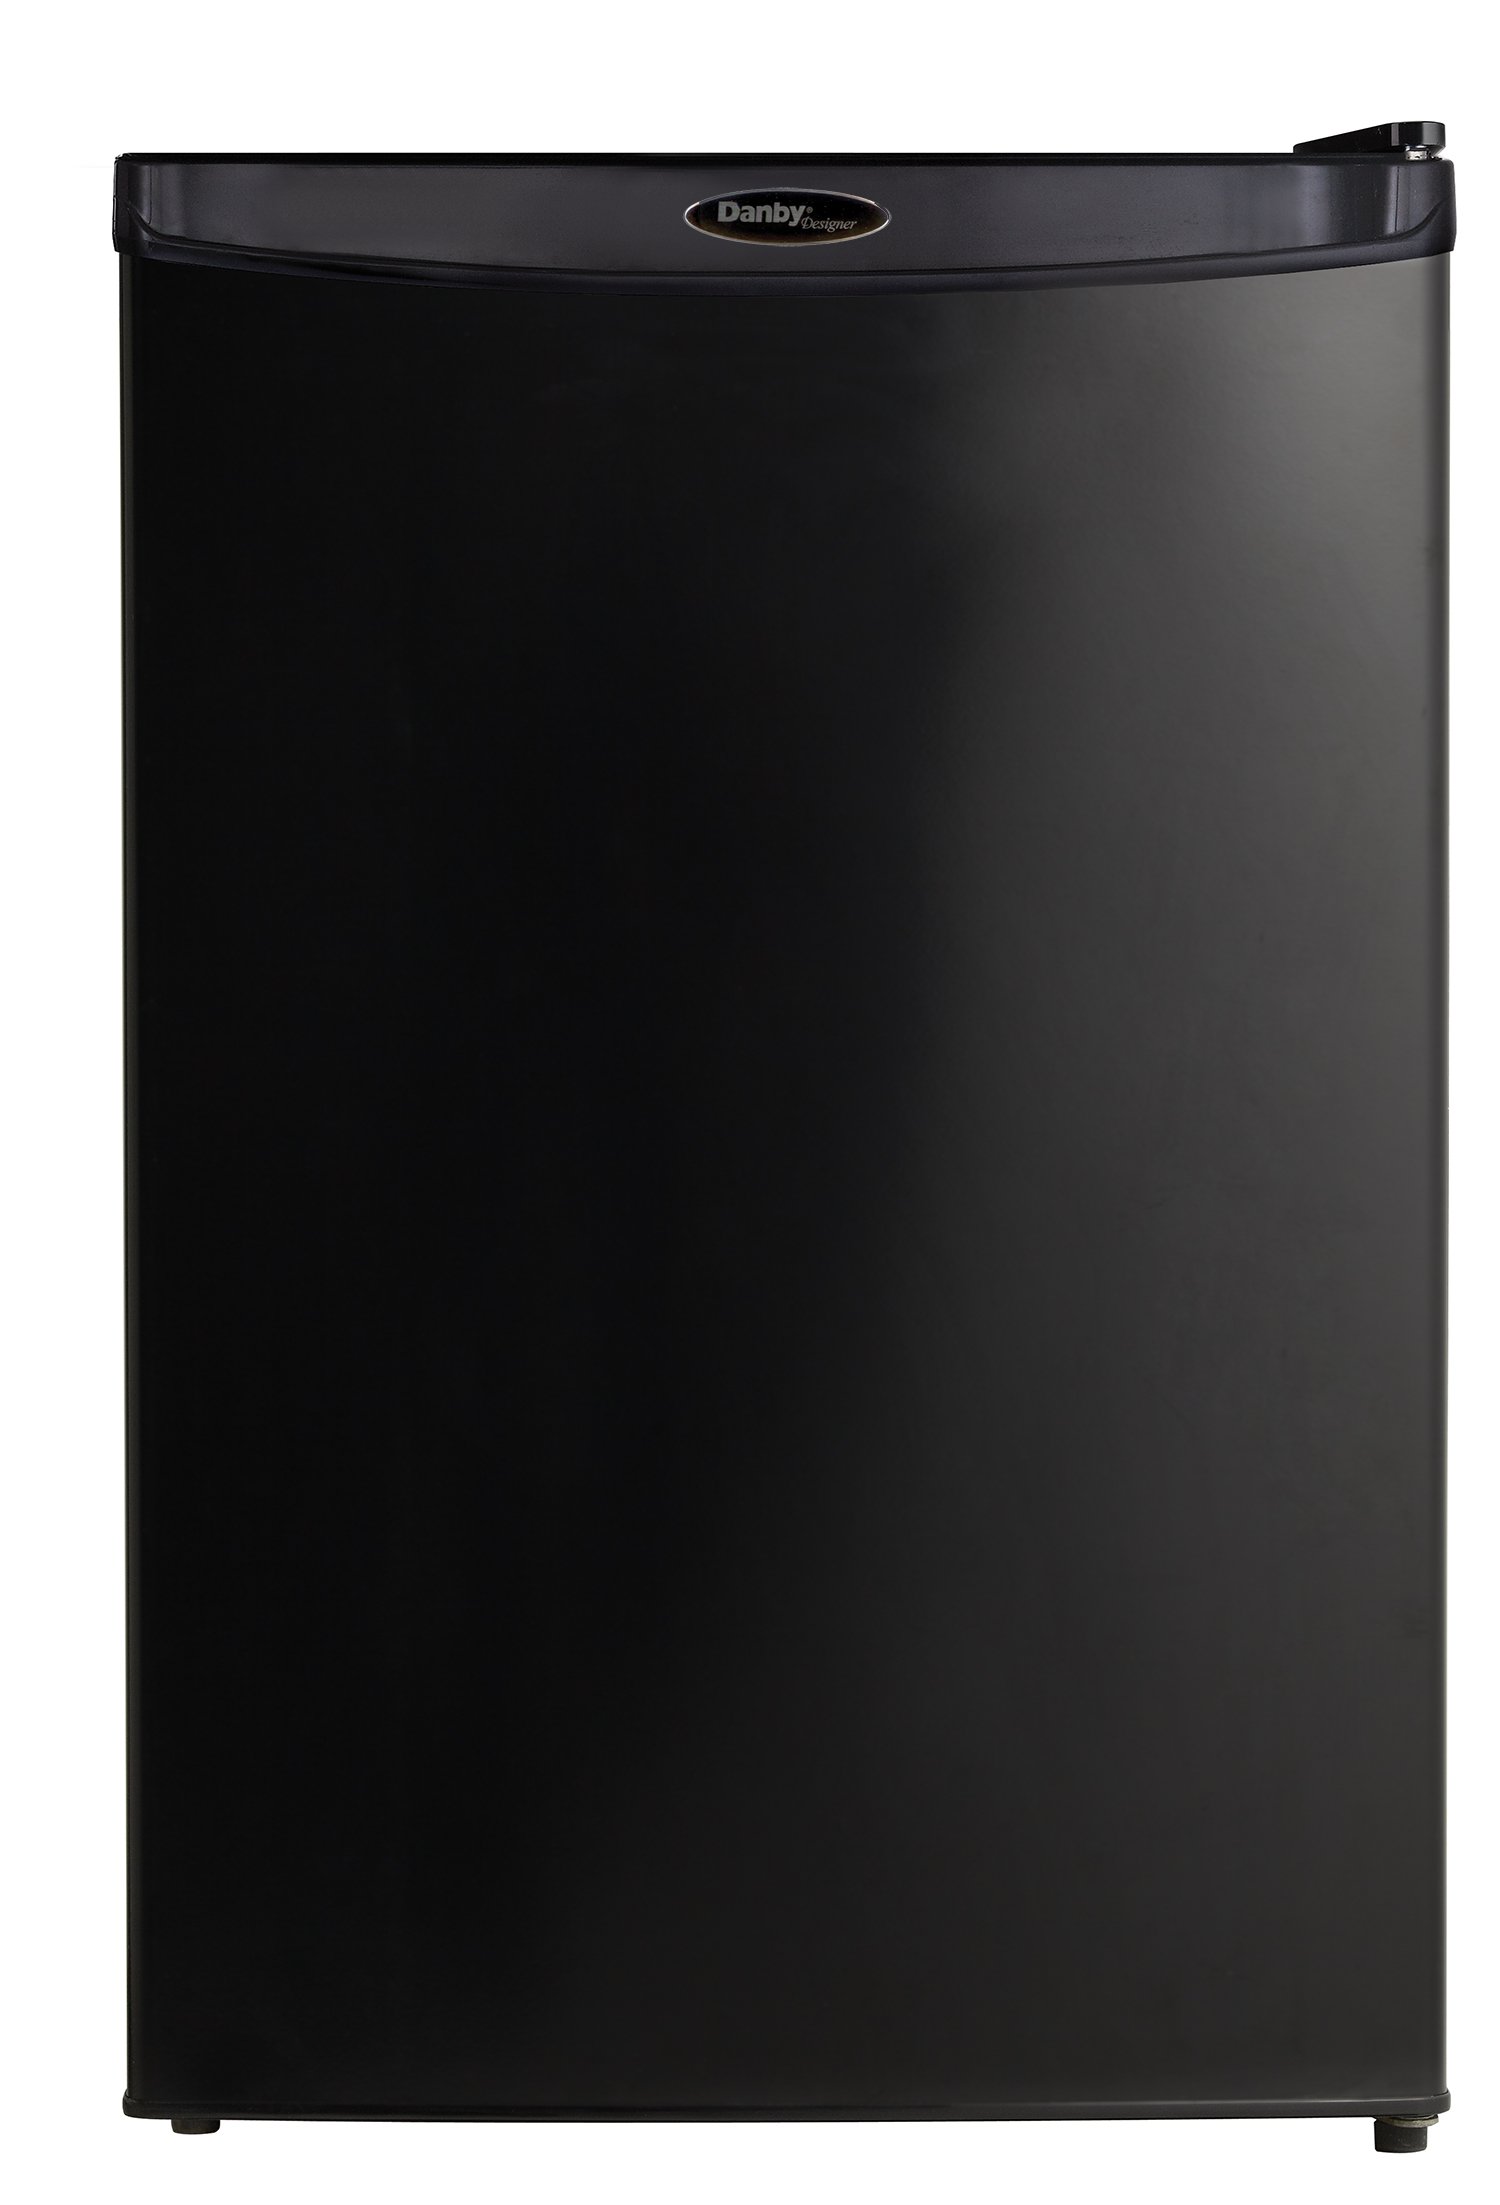 4.4 Cu. Ft. Danby Compact All Refrigerator - Black 